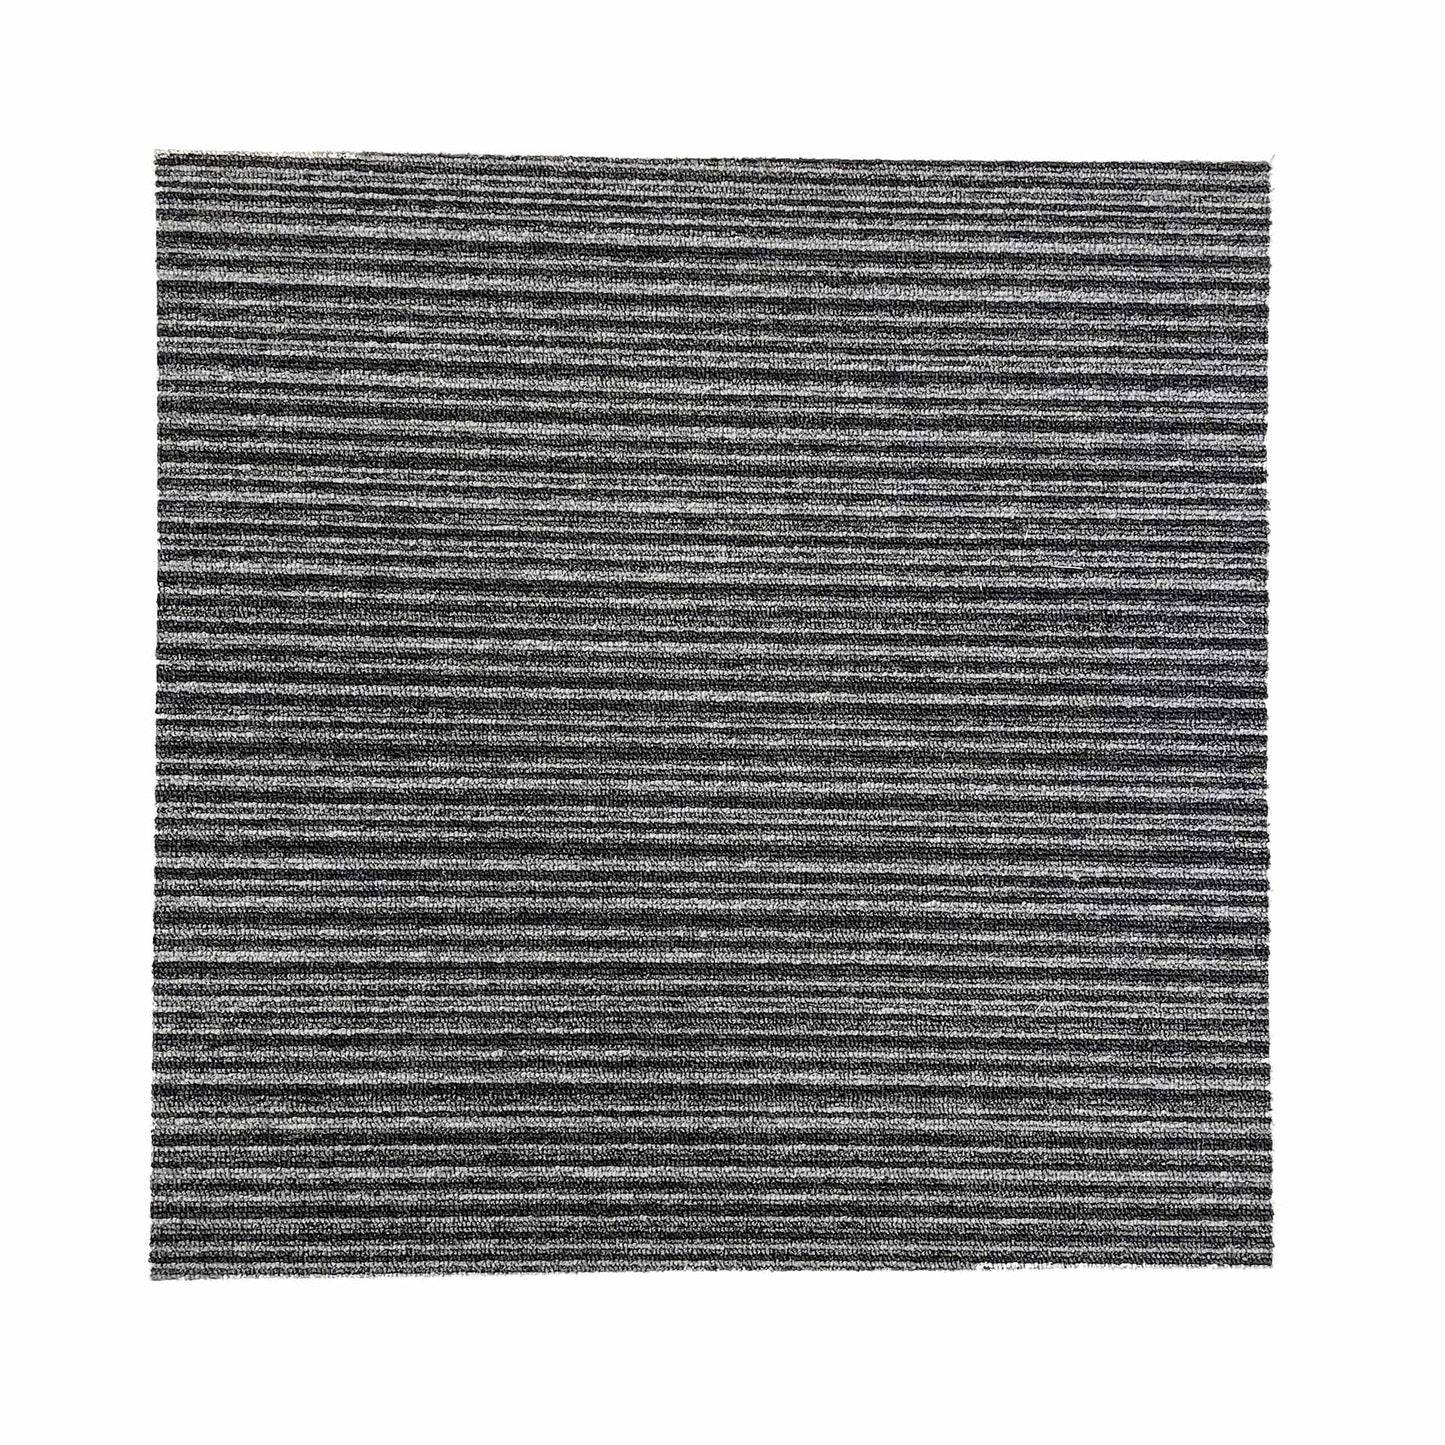 Grey Stripe Carpet Tiles